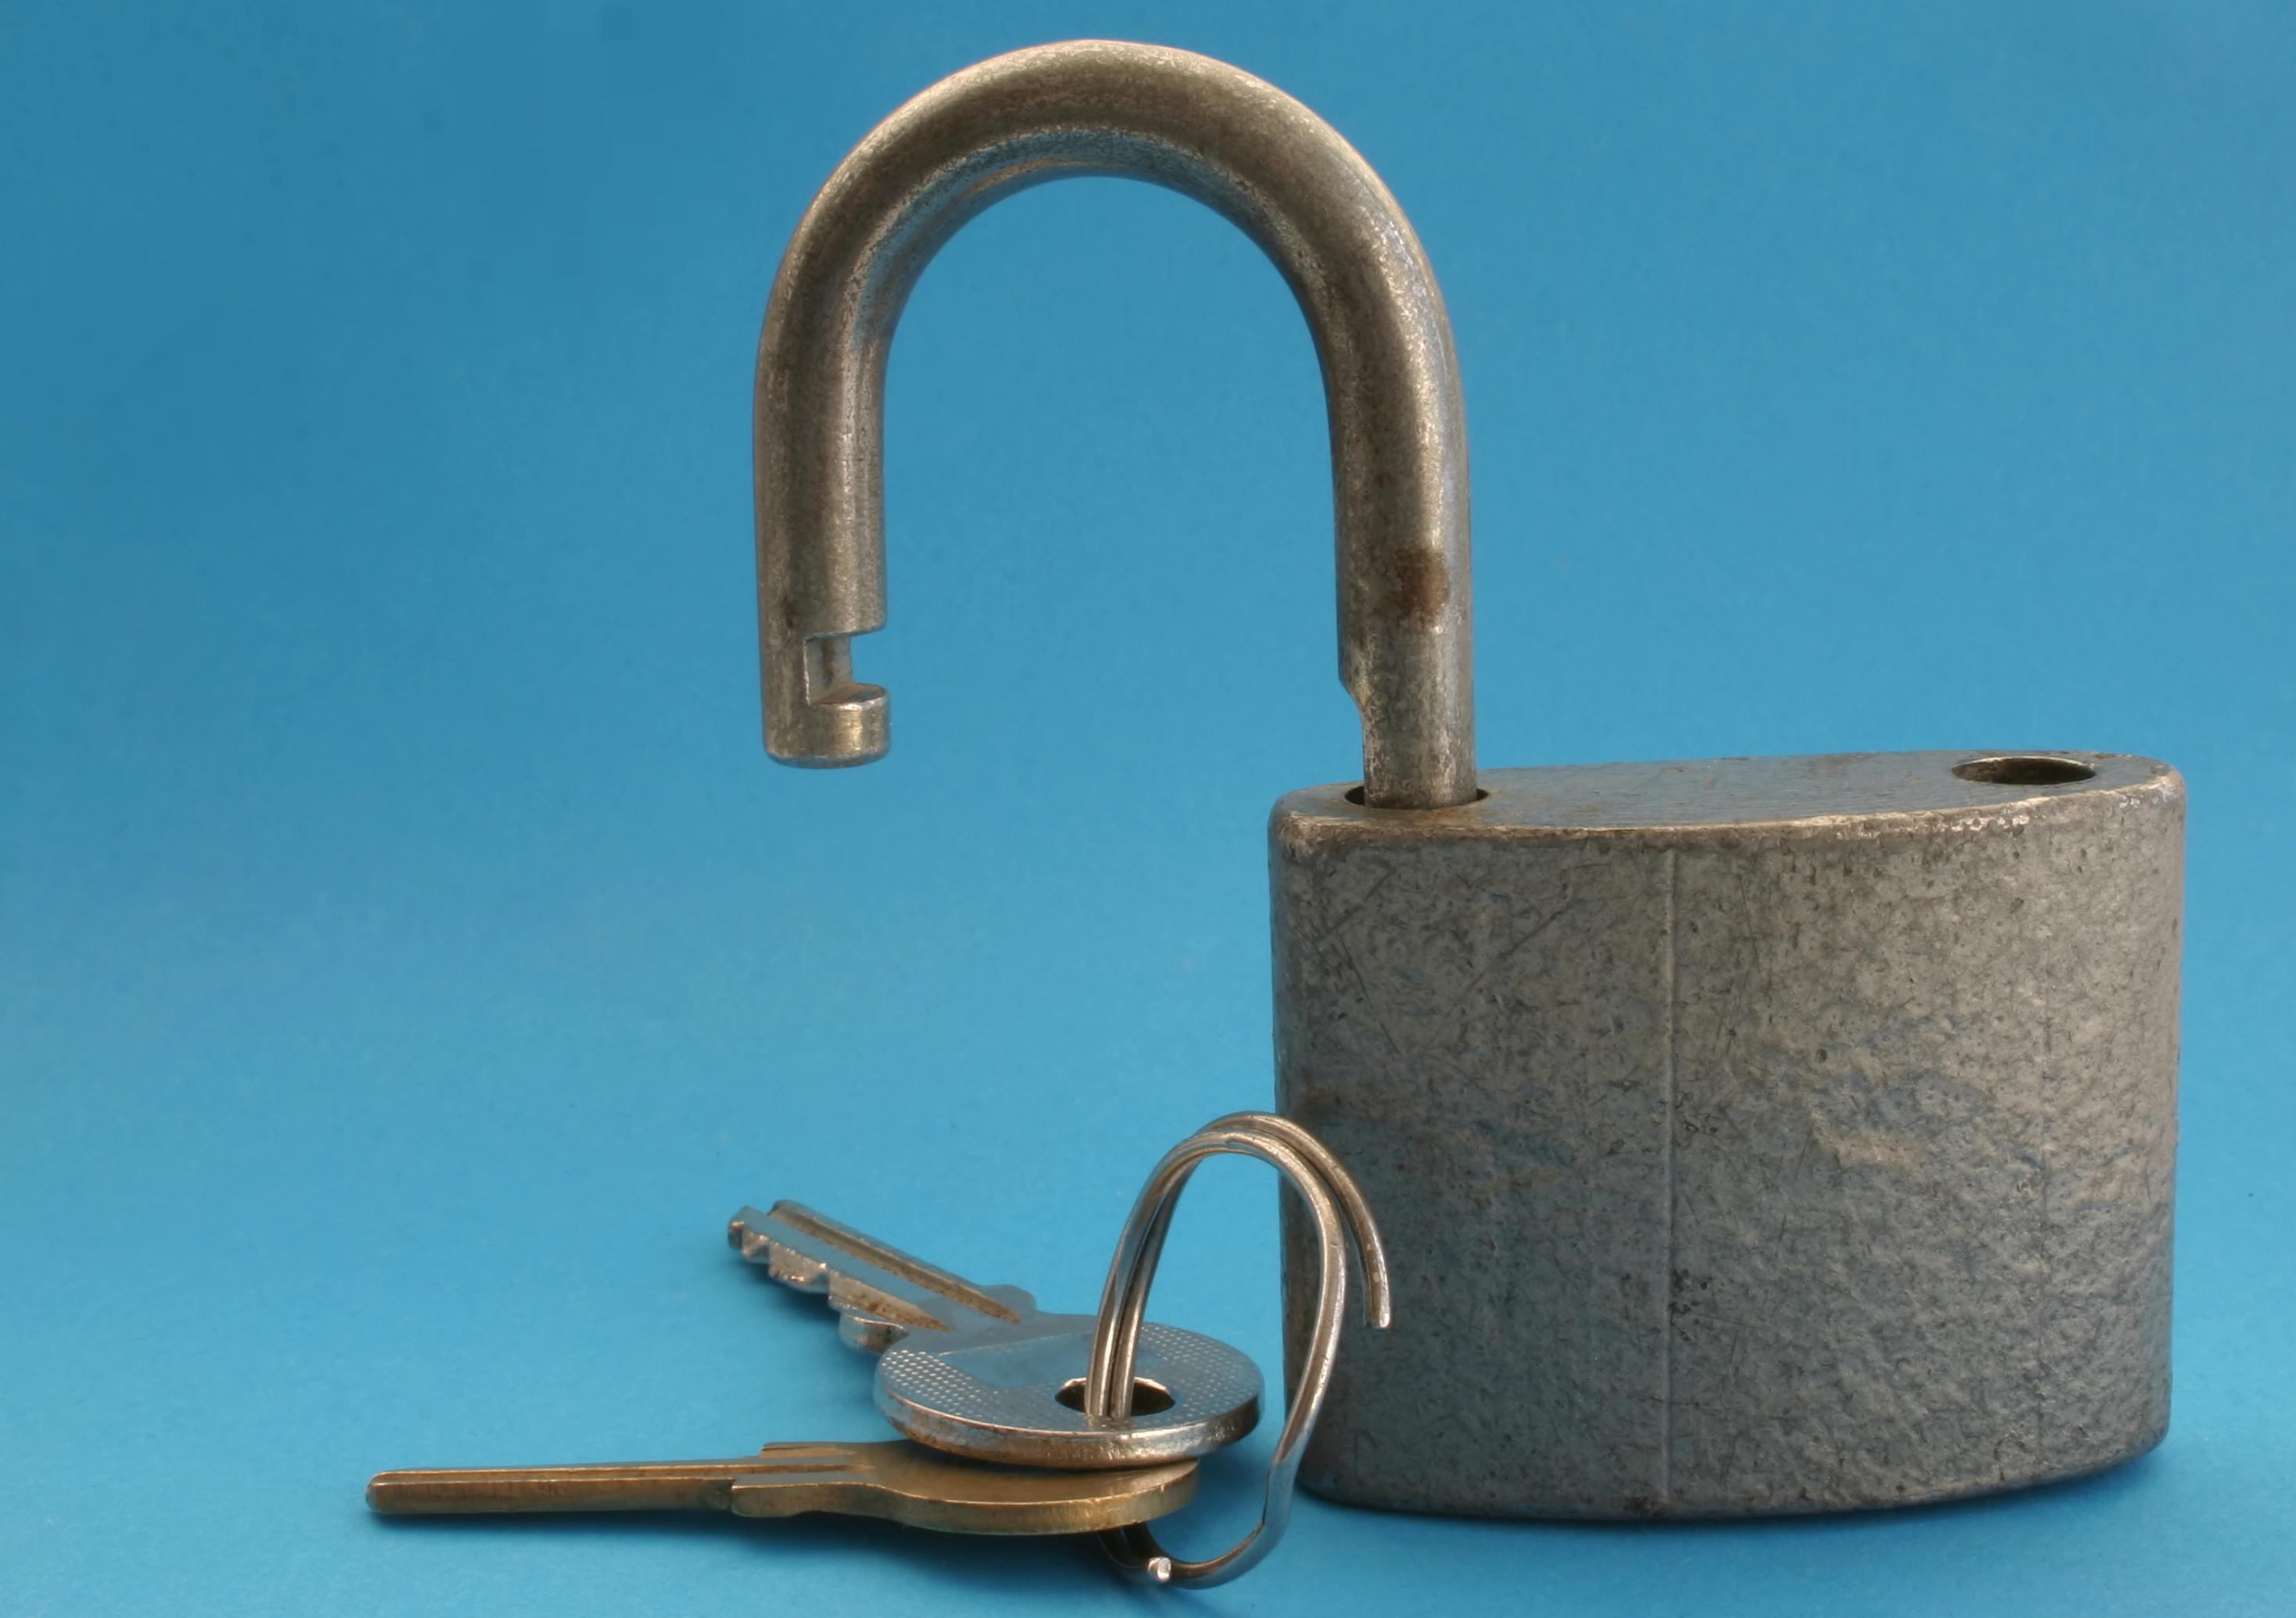 image of padlock and key